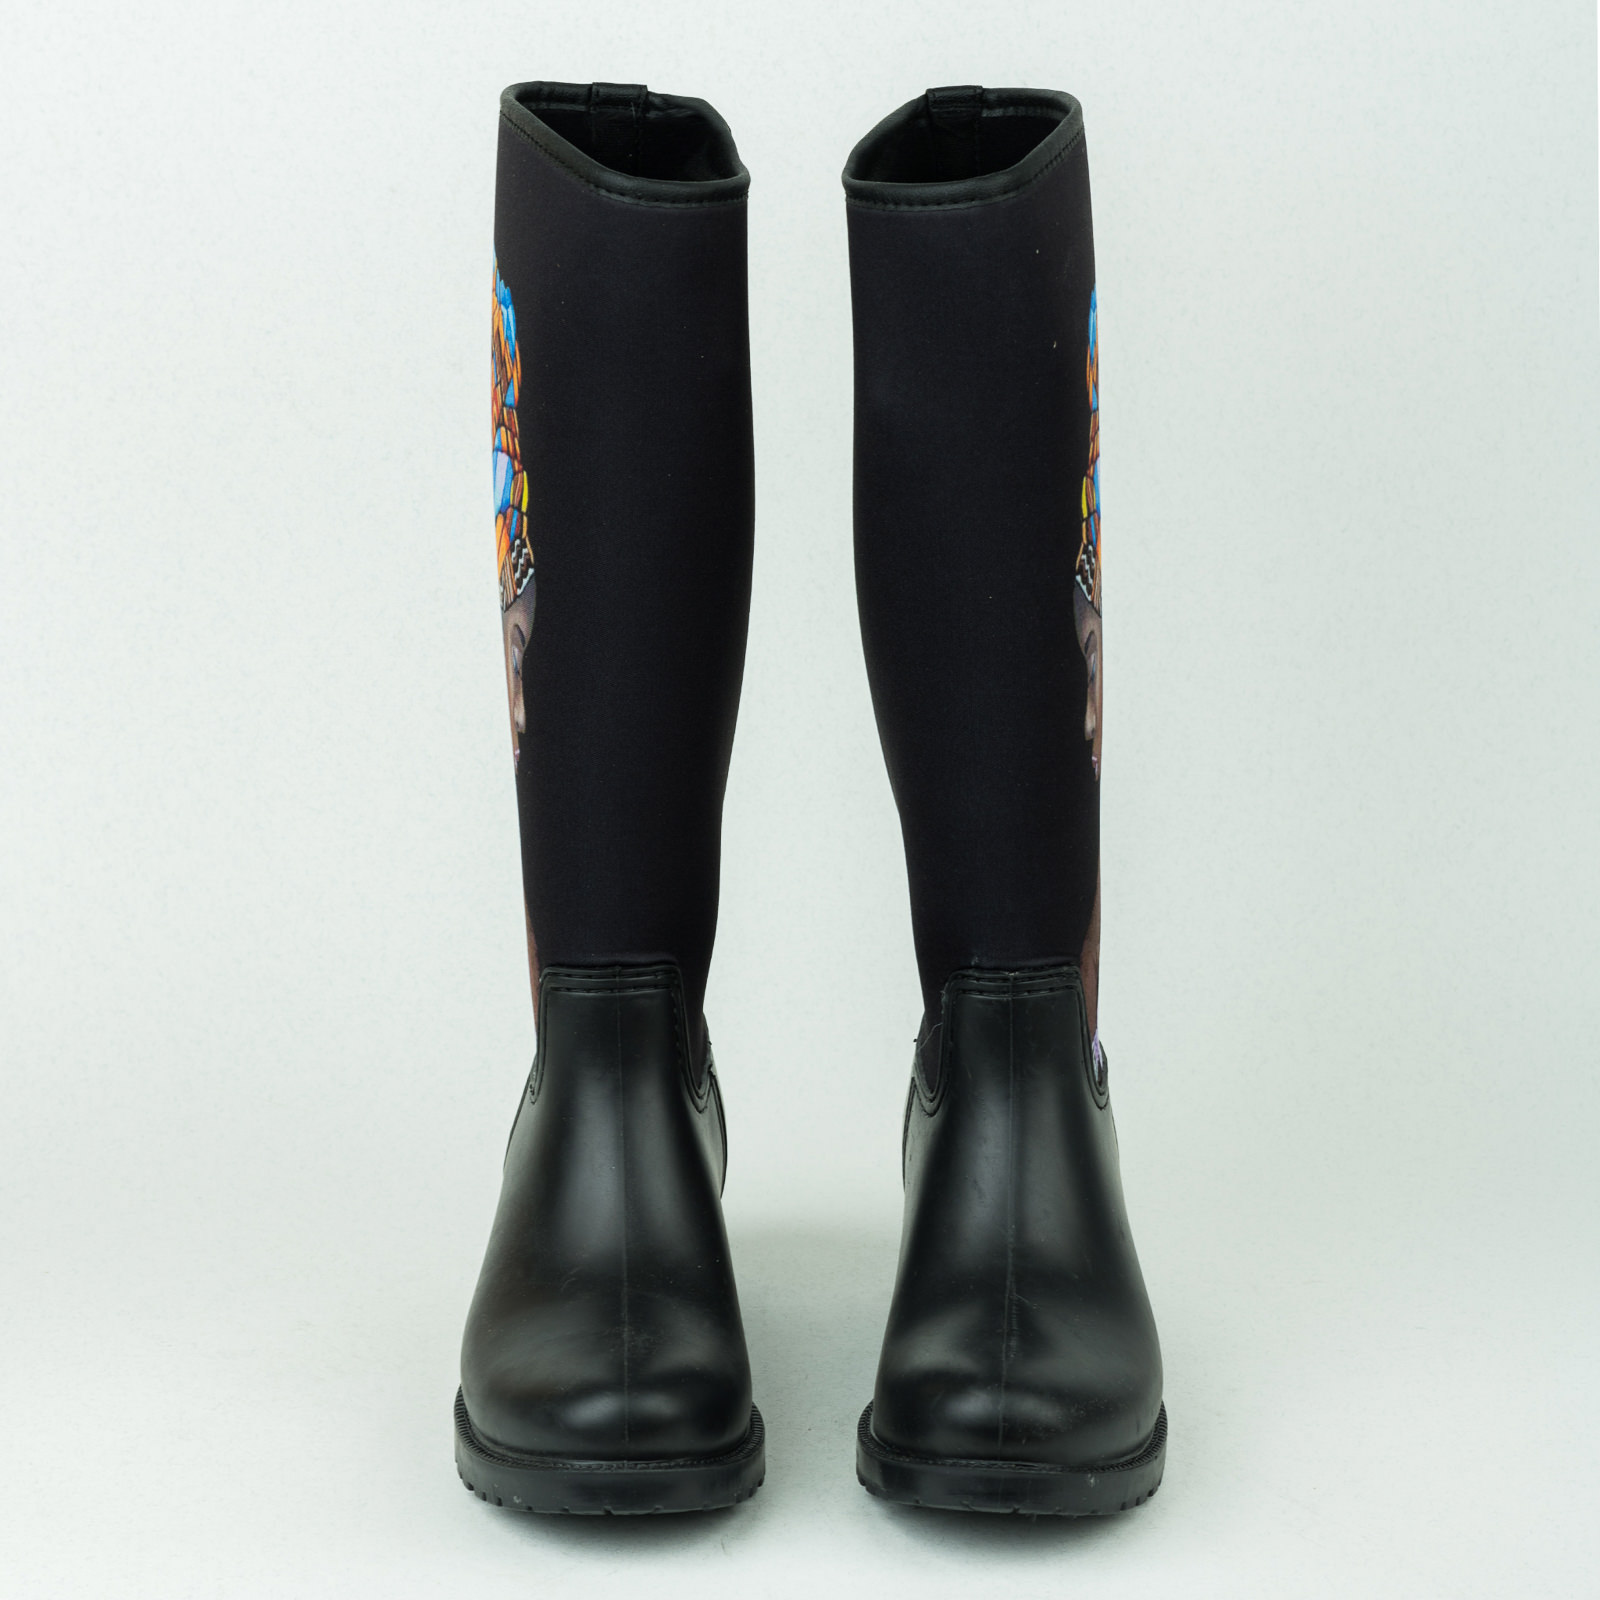 Waterproof boots B389 - BLACK